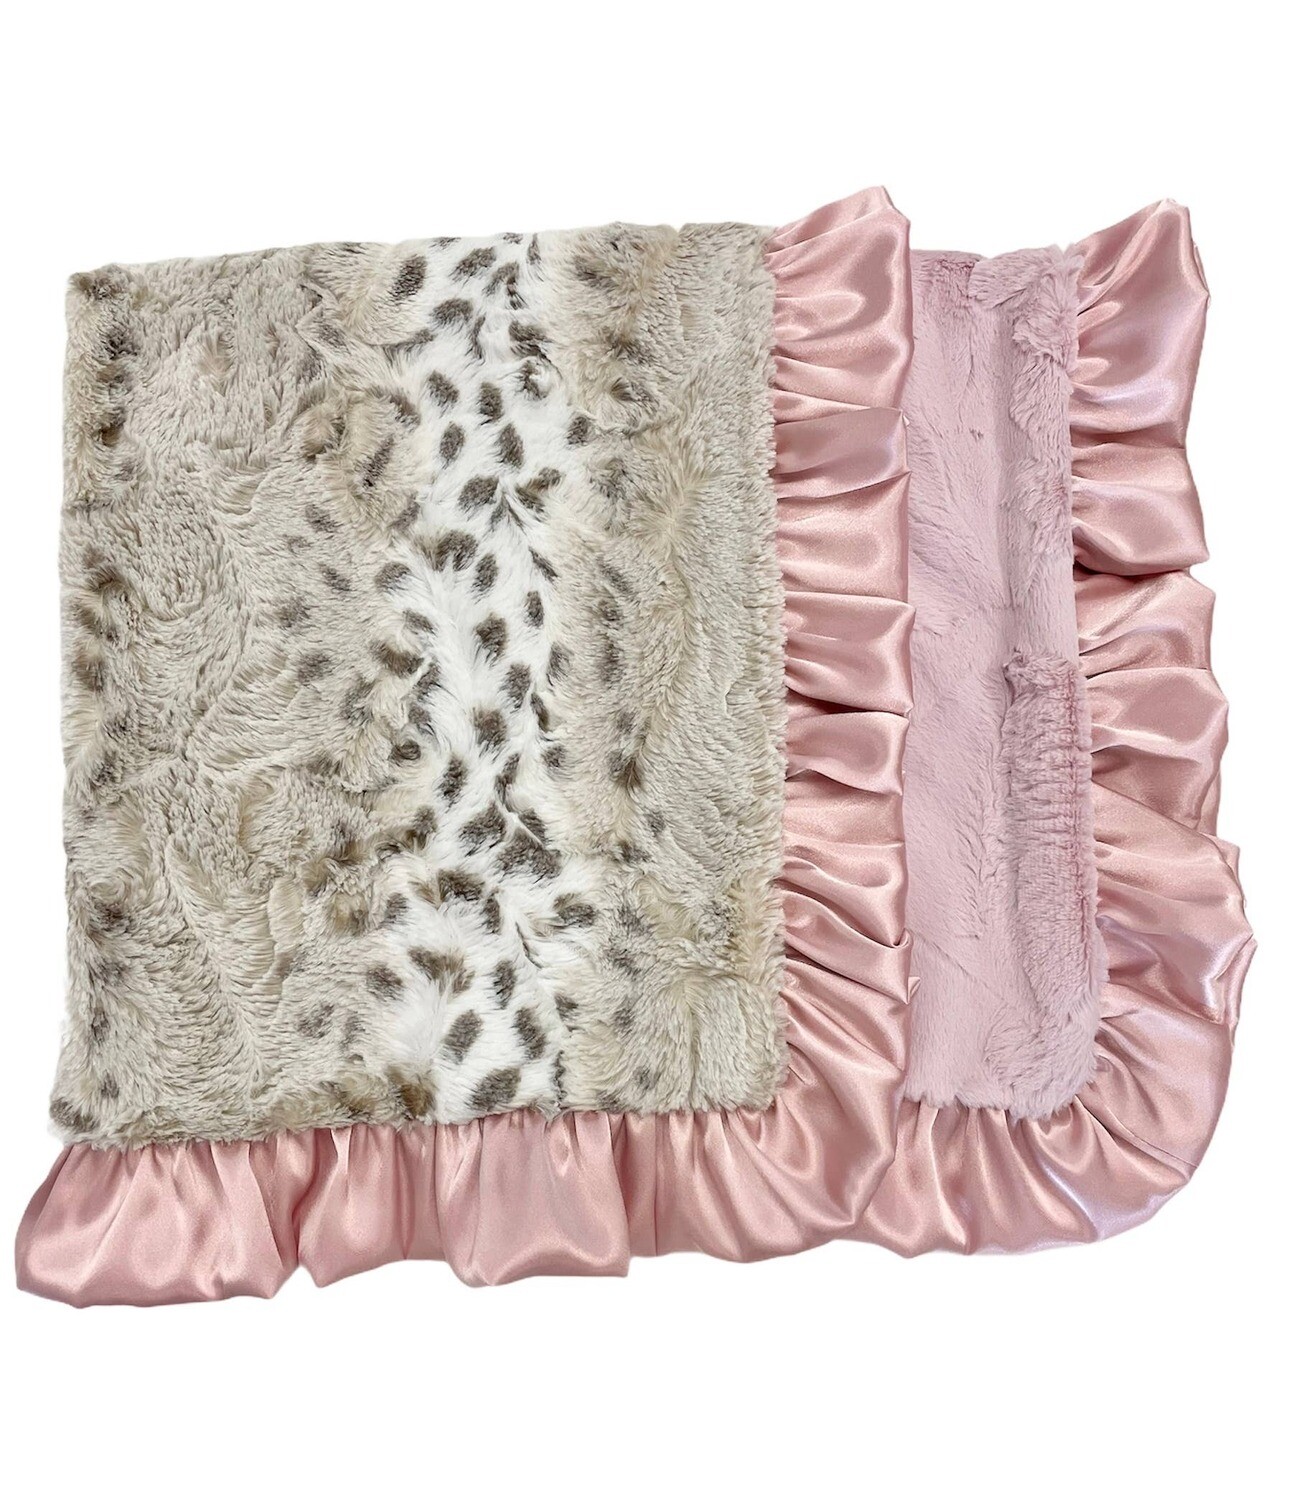 Snowcat Dusty Pink Luxe Cuddle Blanket